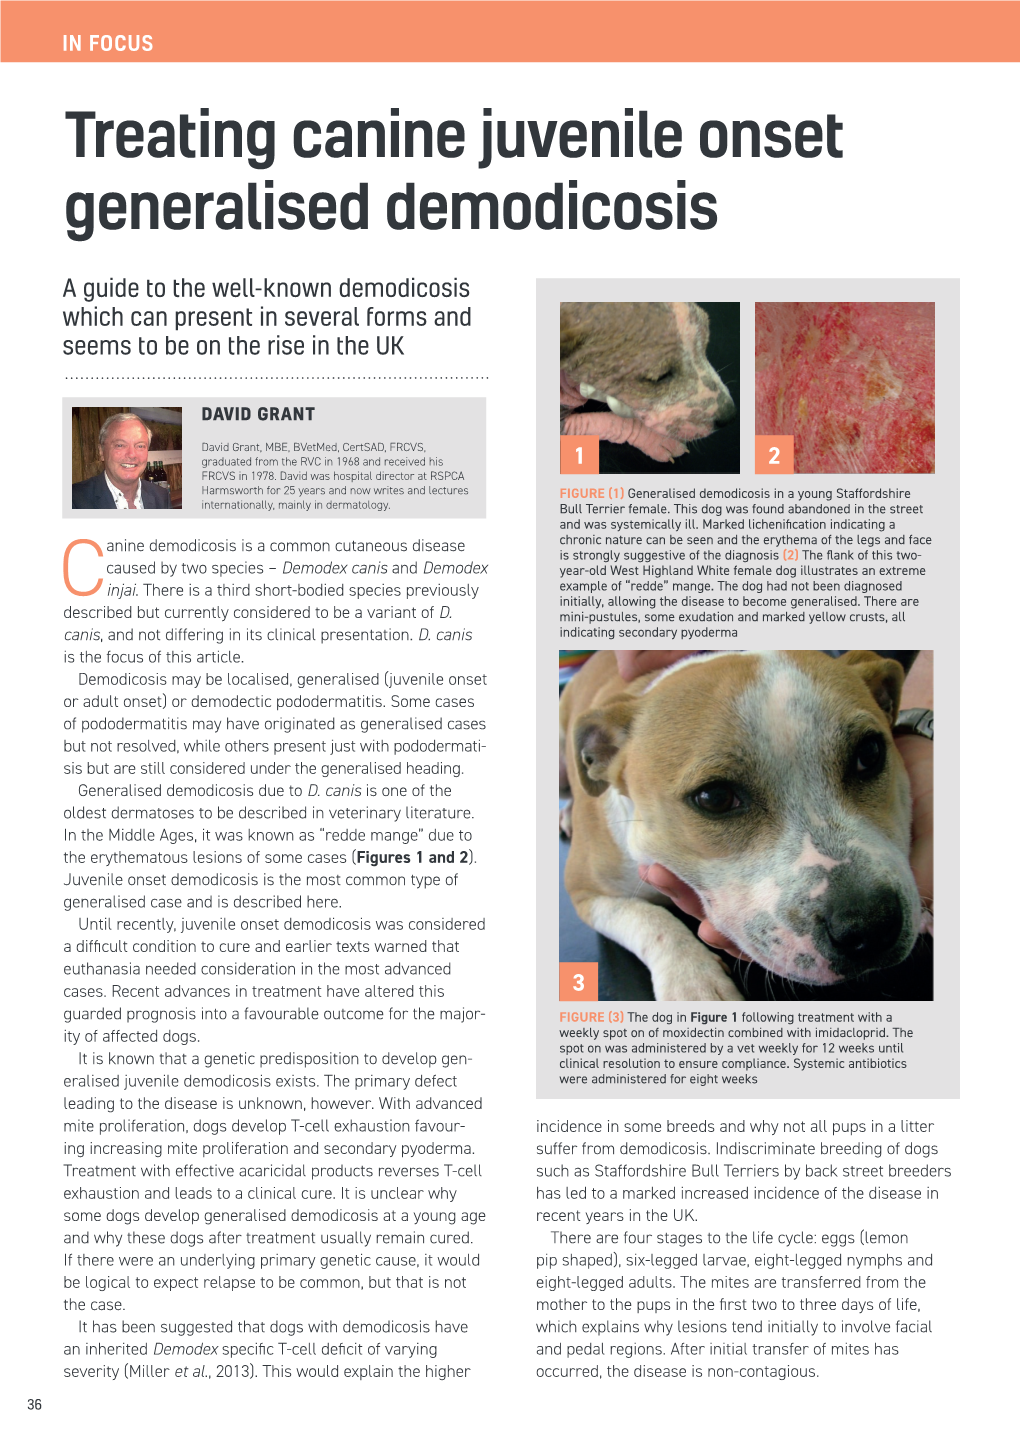 Treating Canine Juvenile Onset Generalised Demodicosis